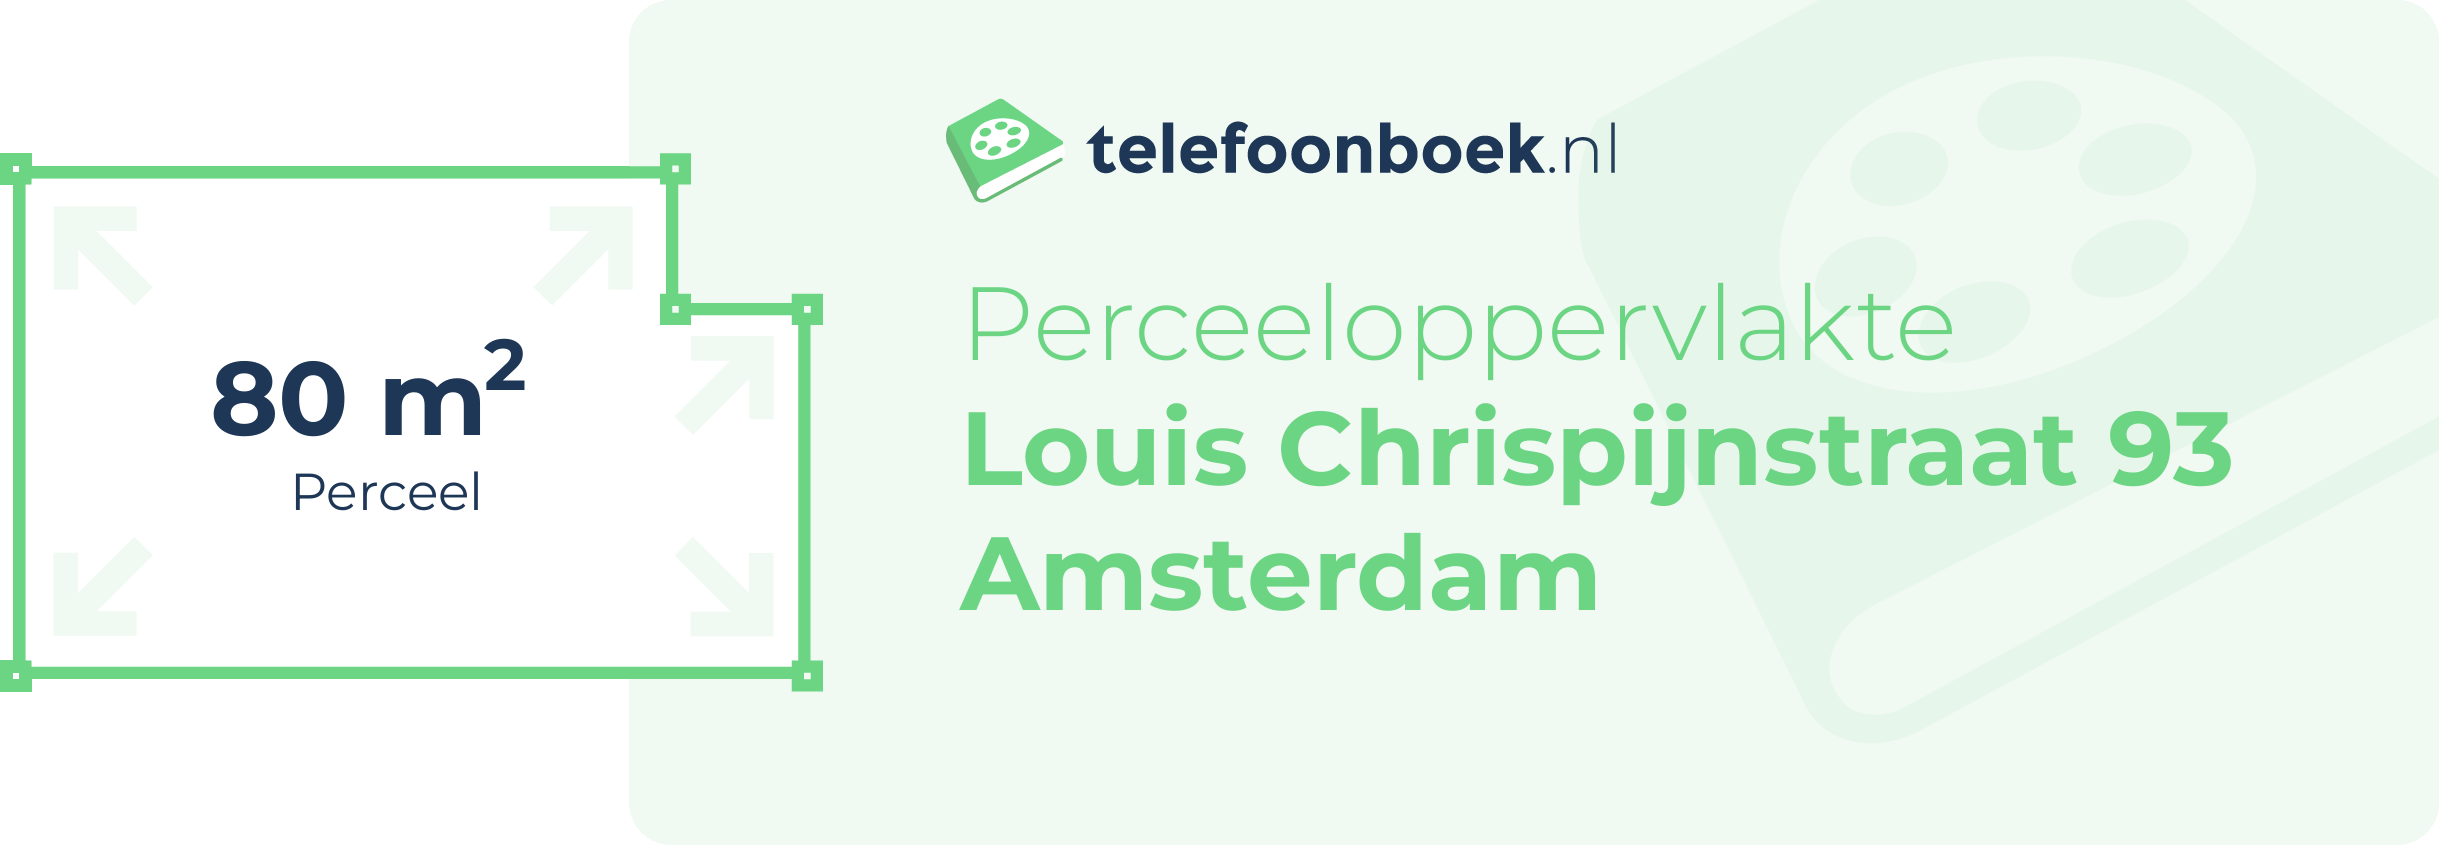 Perceeloppervlakte Louis Chrispijnstraat 93 Amsterdam